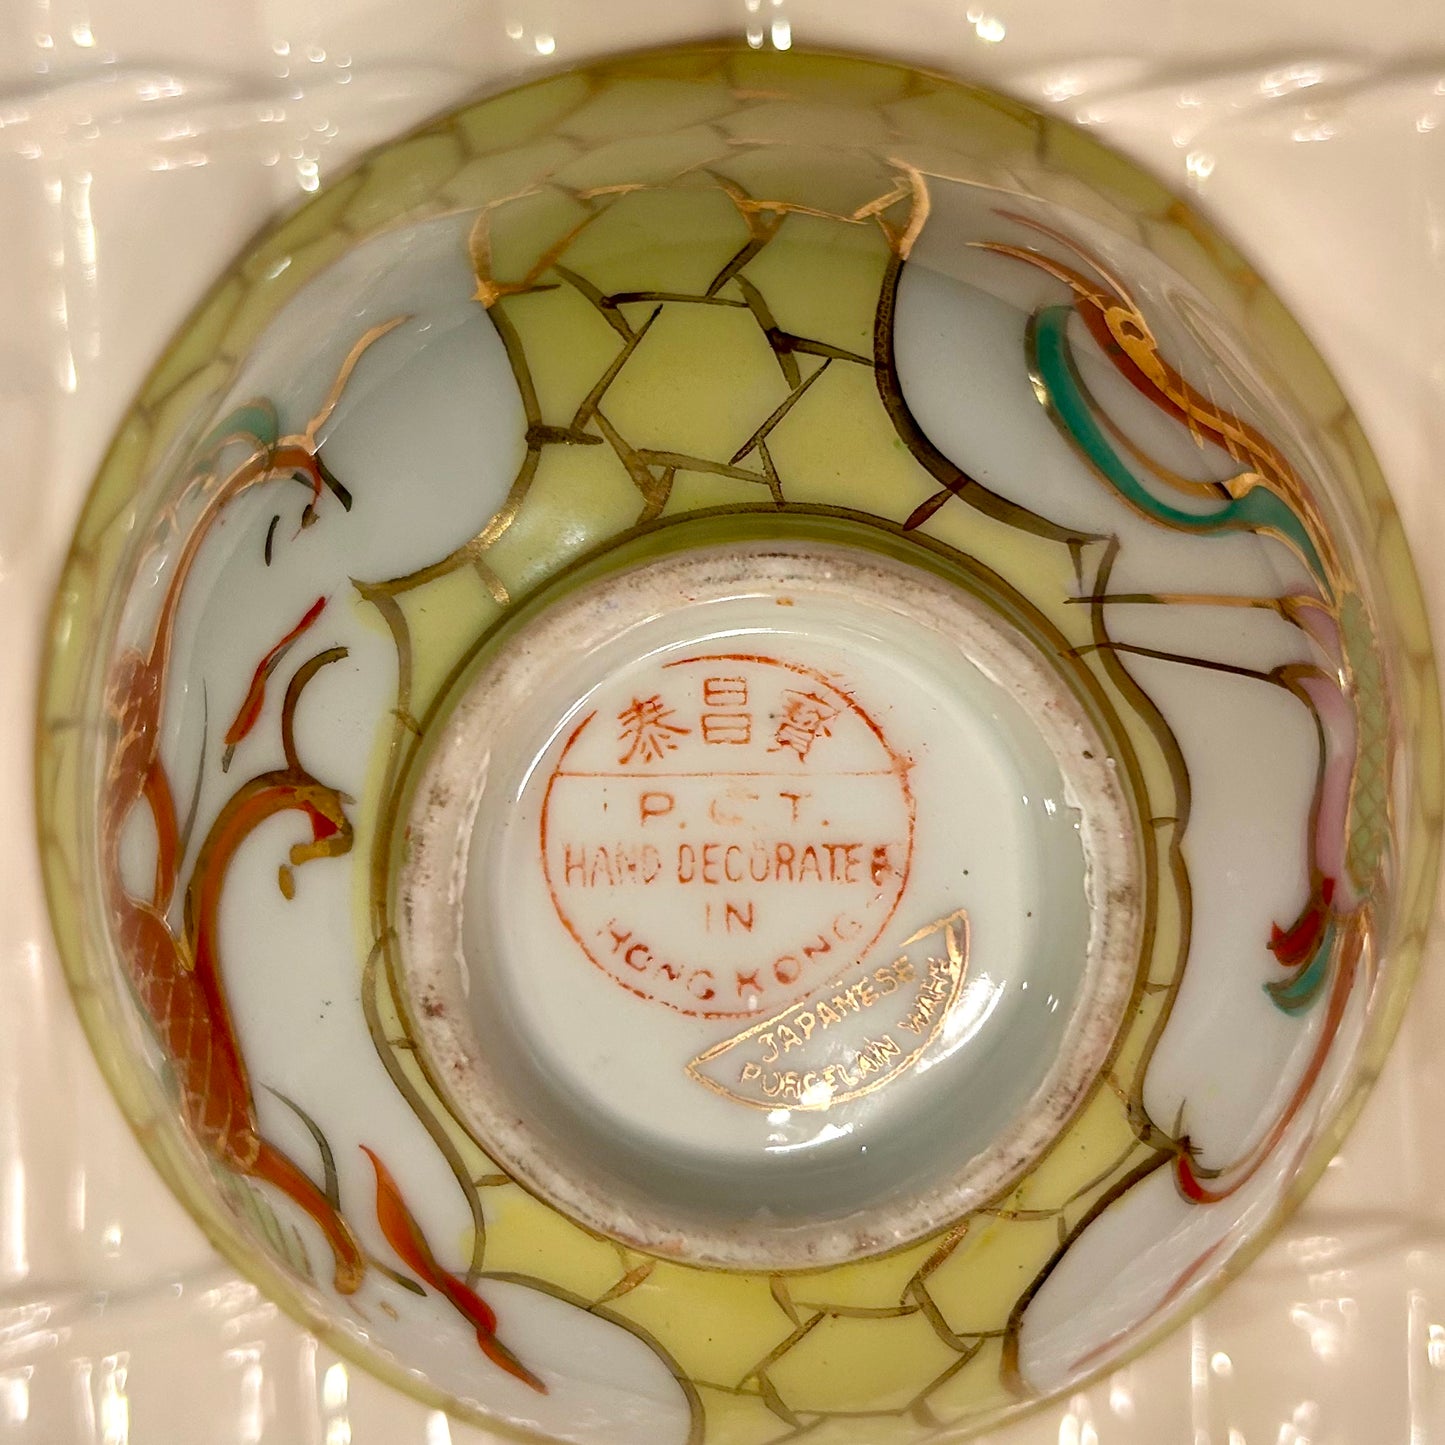 Lovely older vintage Chinoiserie honeycomb dragon design bowl stamped Hong Kong